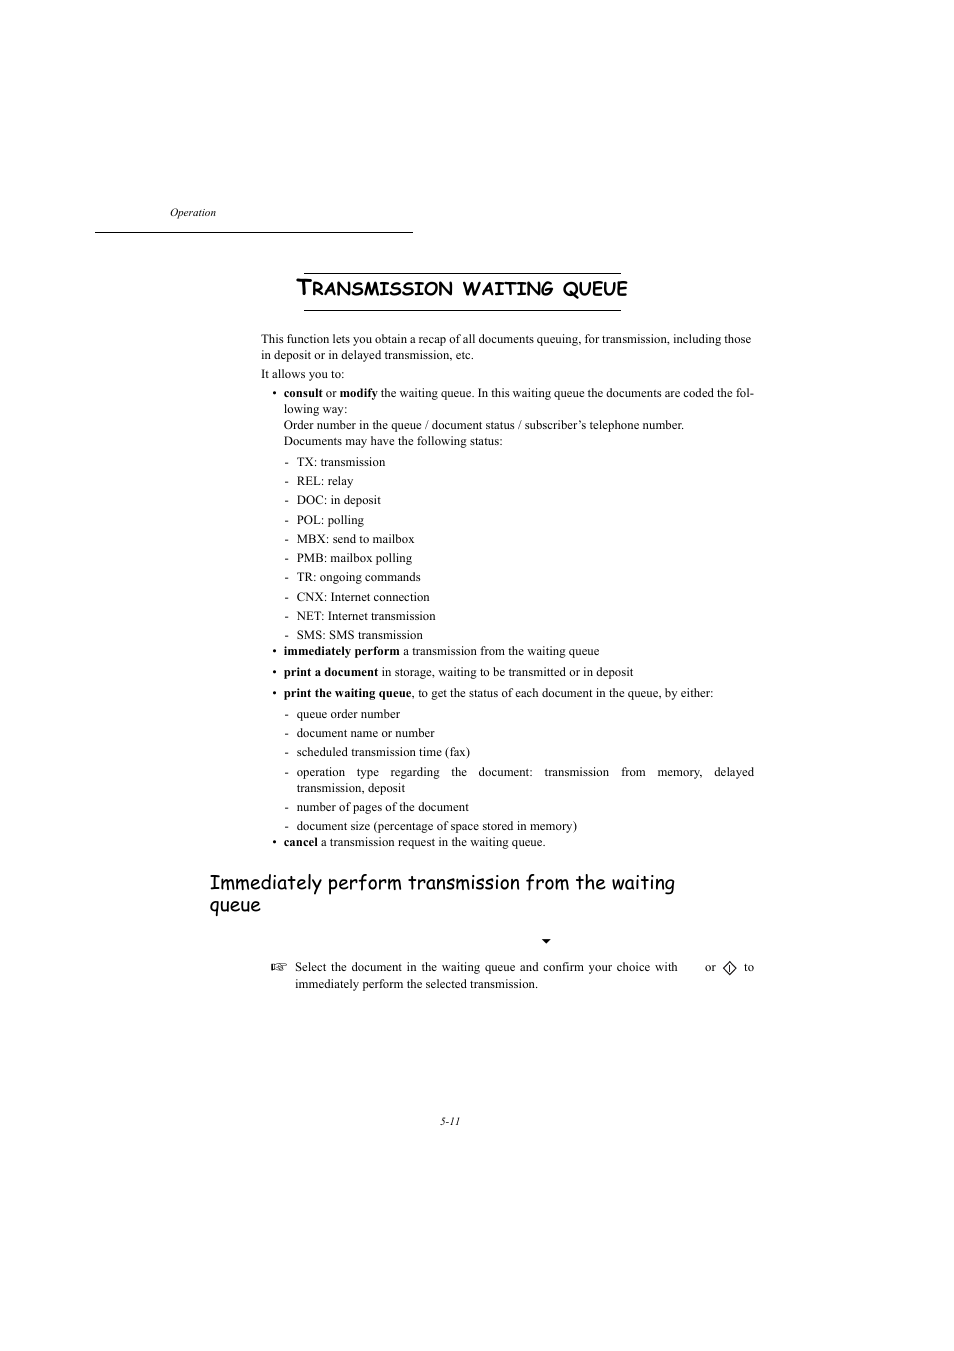 Transmission waiting queue, P. 5-11, Ransmission | Waiting, Queue | TA Triumph-Adler MFP 980 User Manual | Page 78 / 125